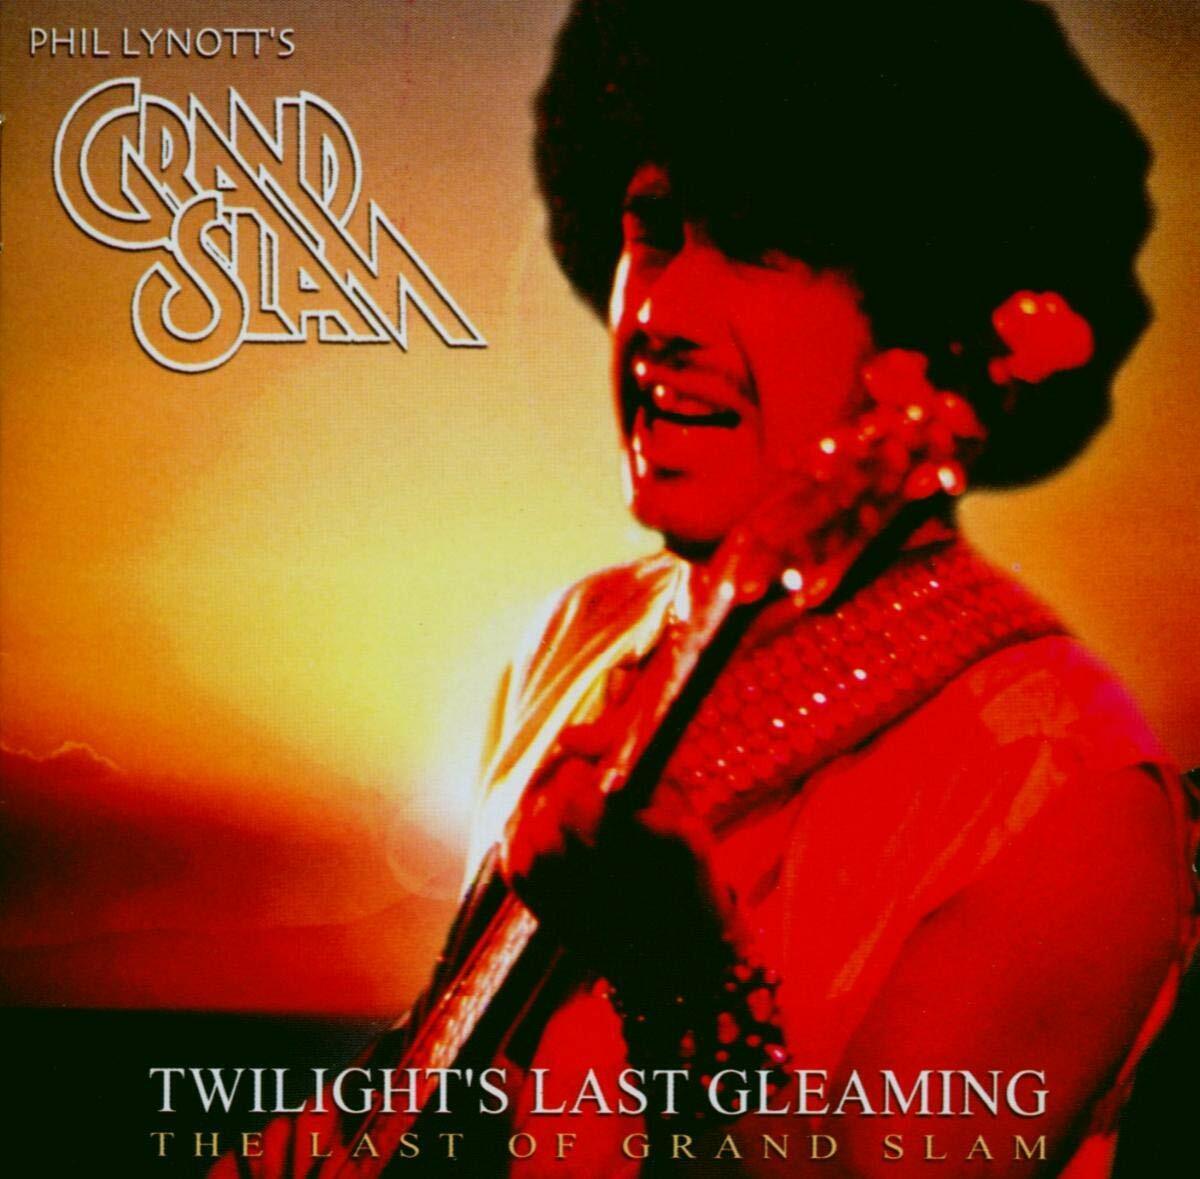 Grand Slam - Twilight's Last Gleaming CD 2003 Thin Lizzy Phil Lynott